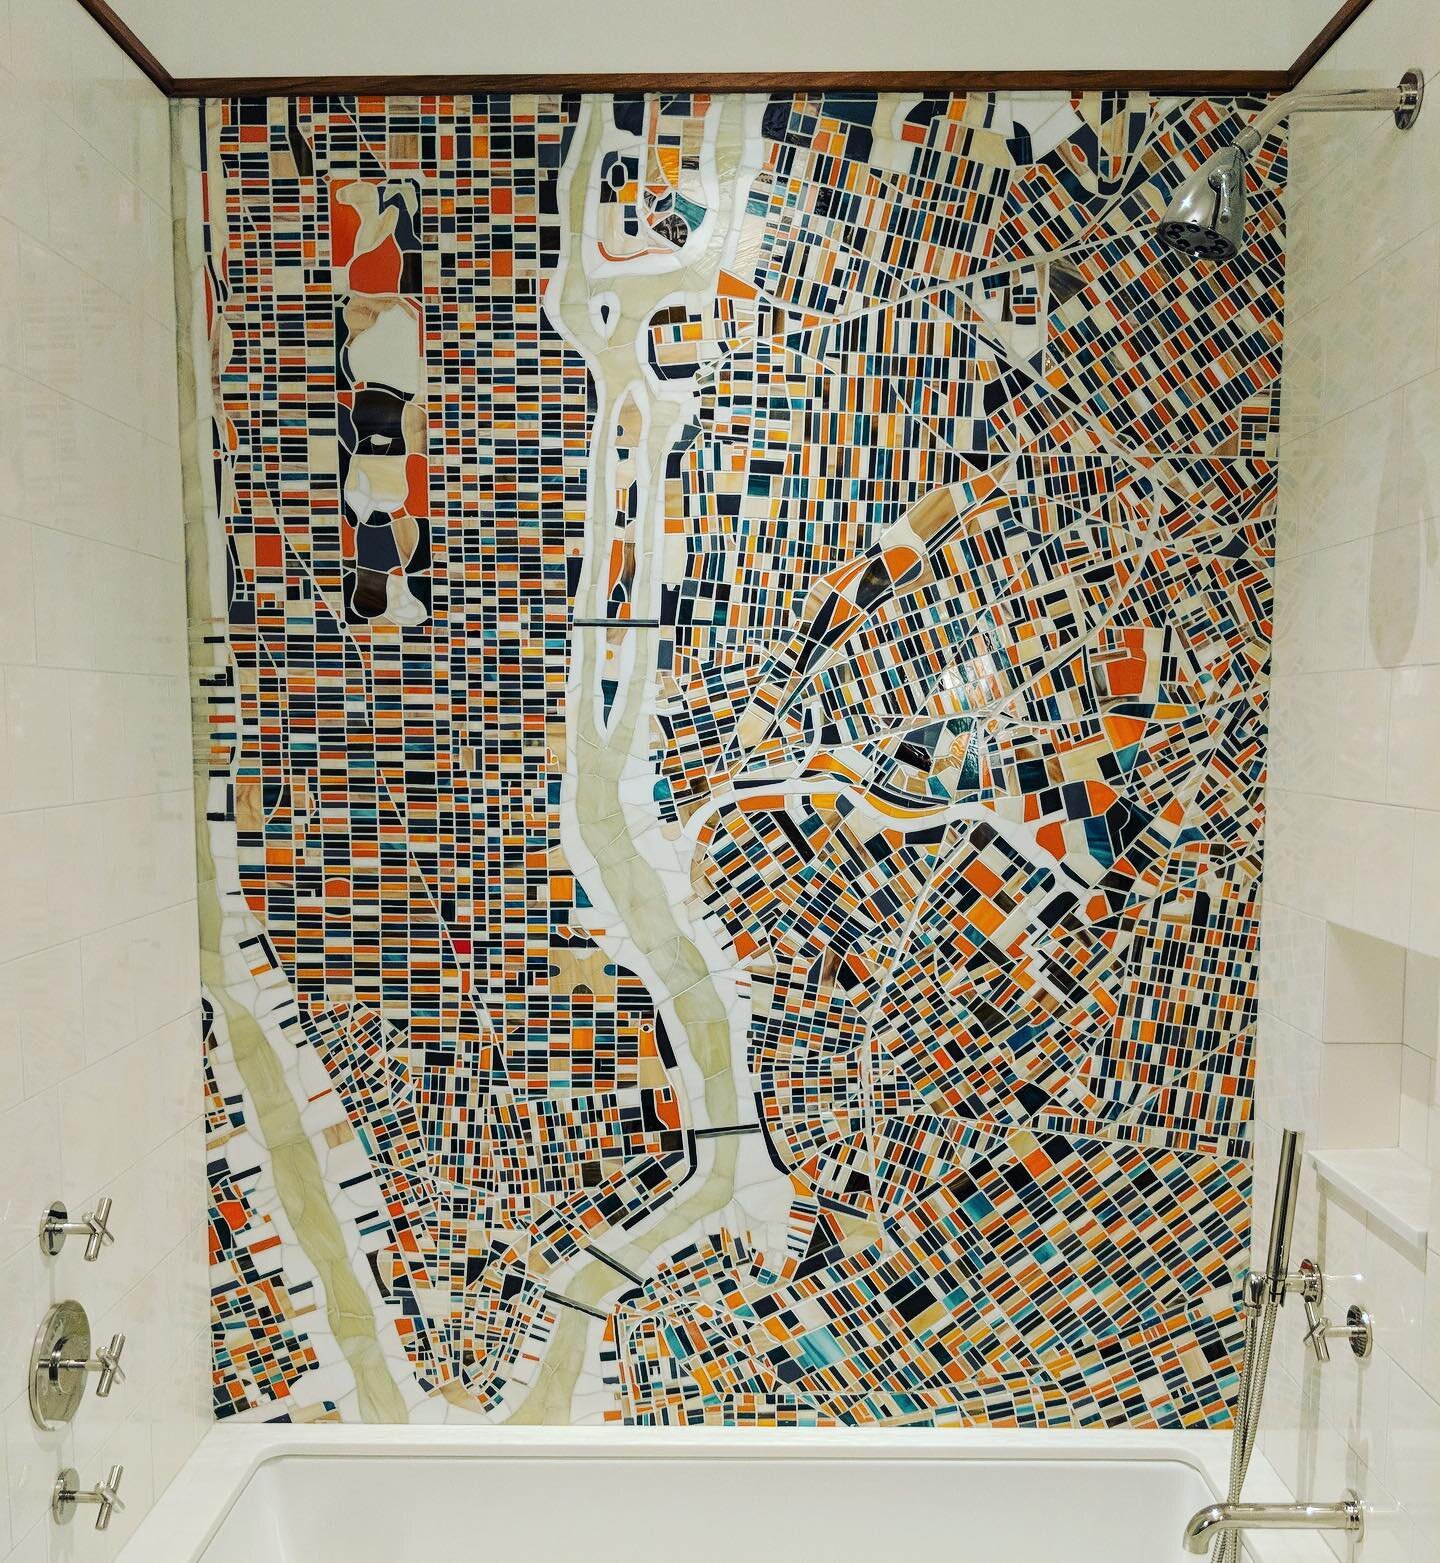 A mosaic map of NYC for a lucky little boys bathroom. 
Fabricated - @mixedupmosaic
Architect - @andrewfranzarchitect 
.
.
.
#mixedupmosaic #handmade #mosaic #madeinbrookyn  #custommosaics #mosaic 
#glasstile #madeintheusa #stainedglass #design #resid